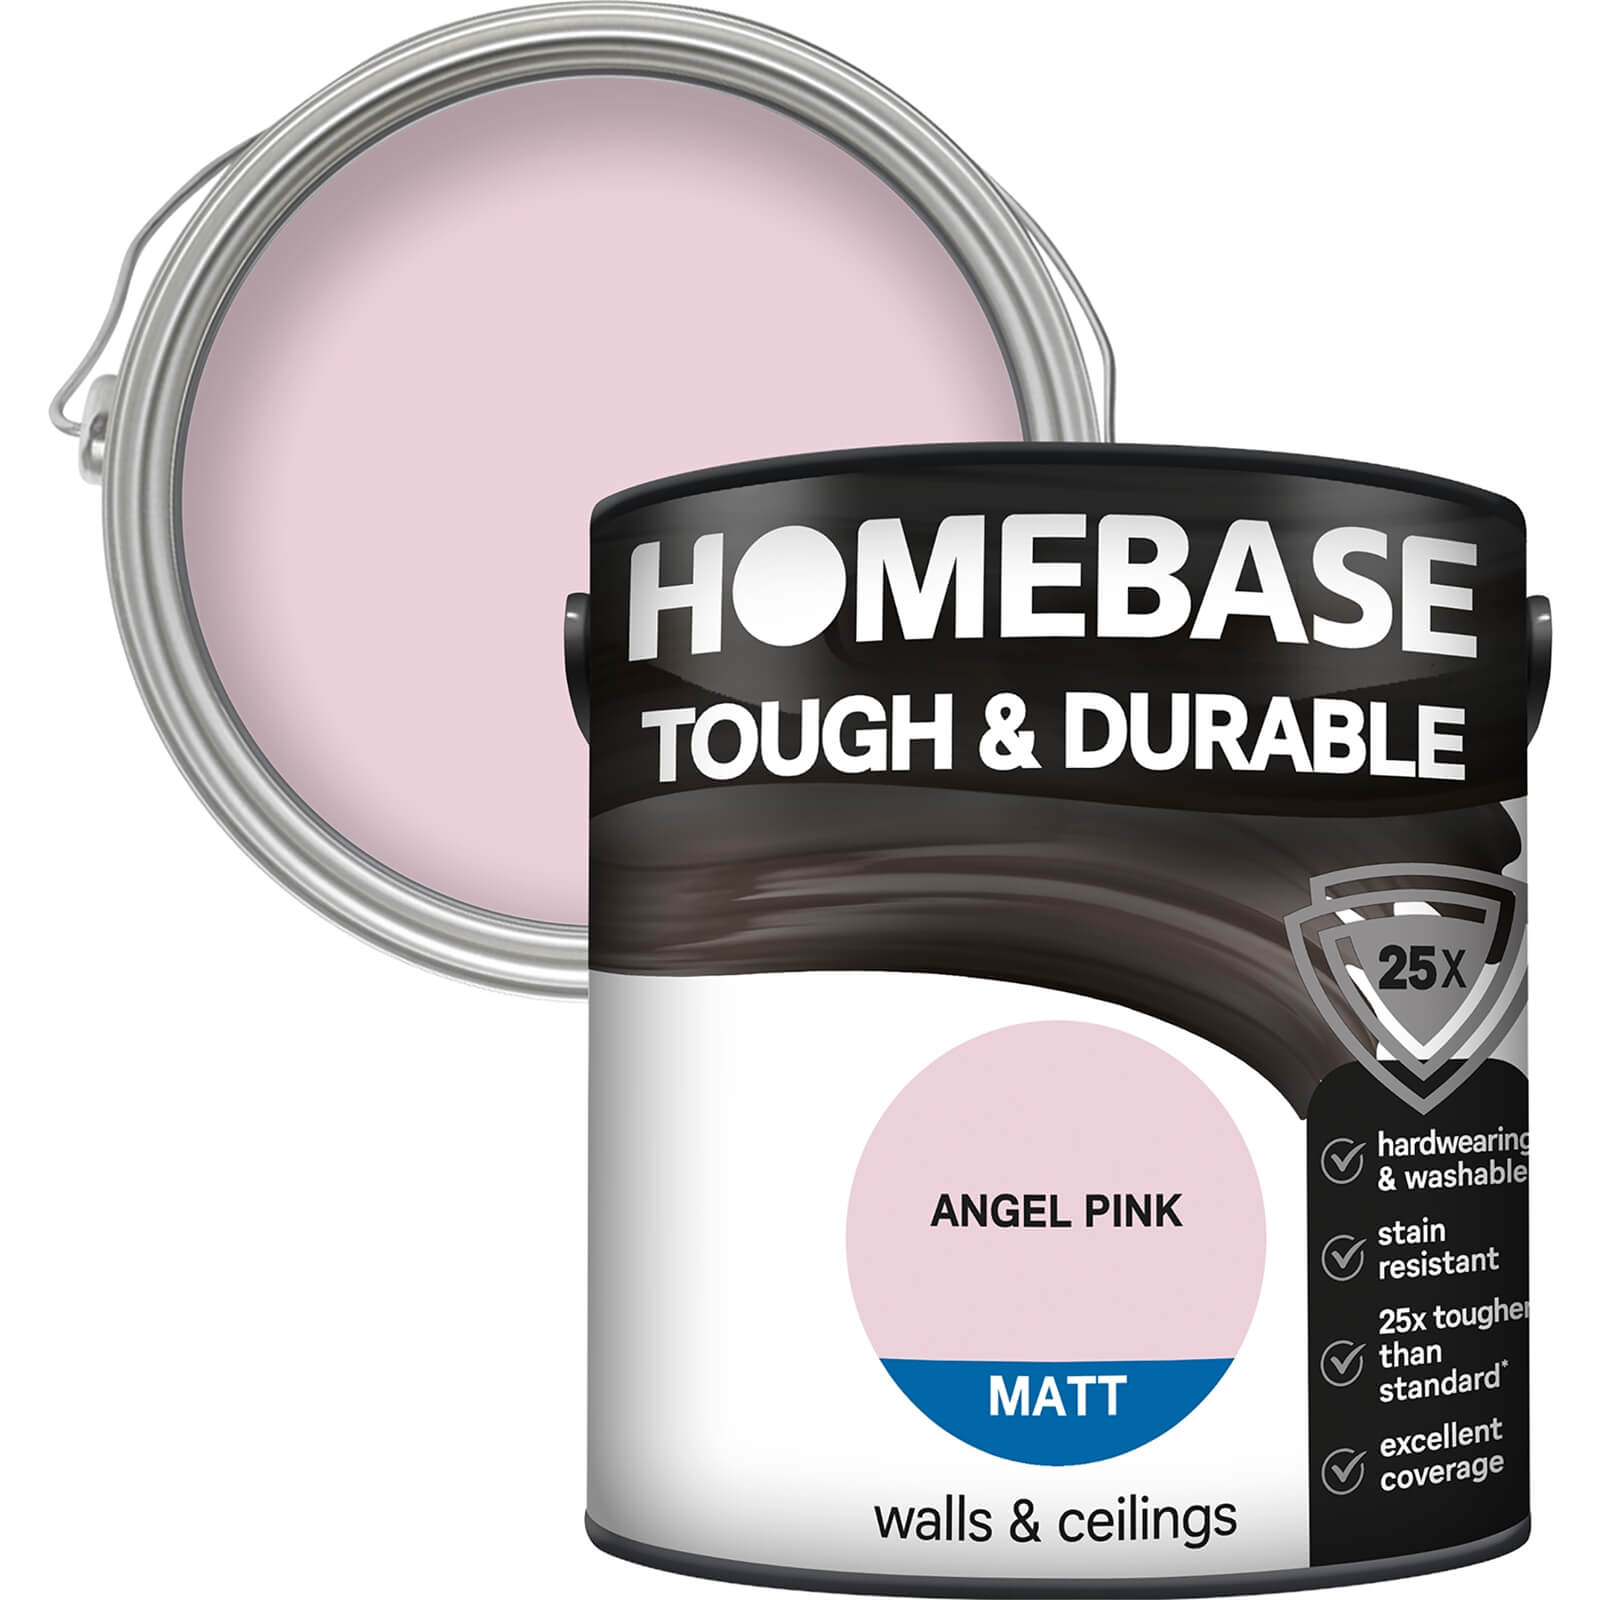 Homebase Tough & Durable Matt Emulsion Paint Angel Pink - 2.5L